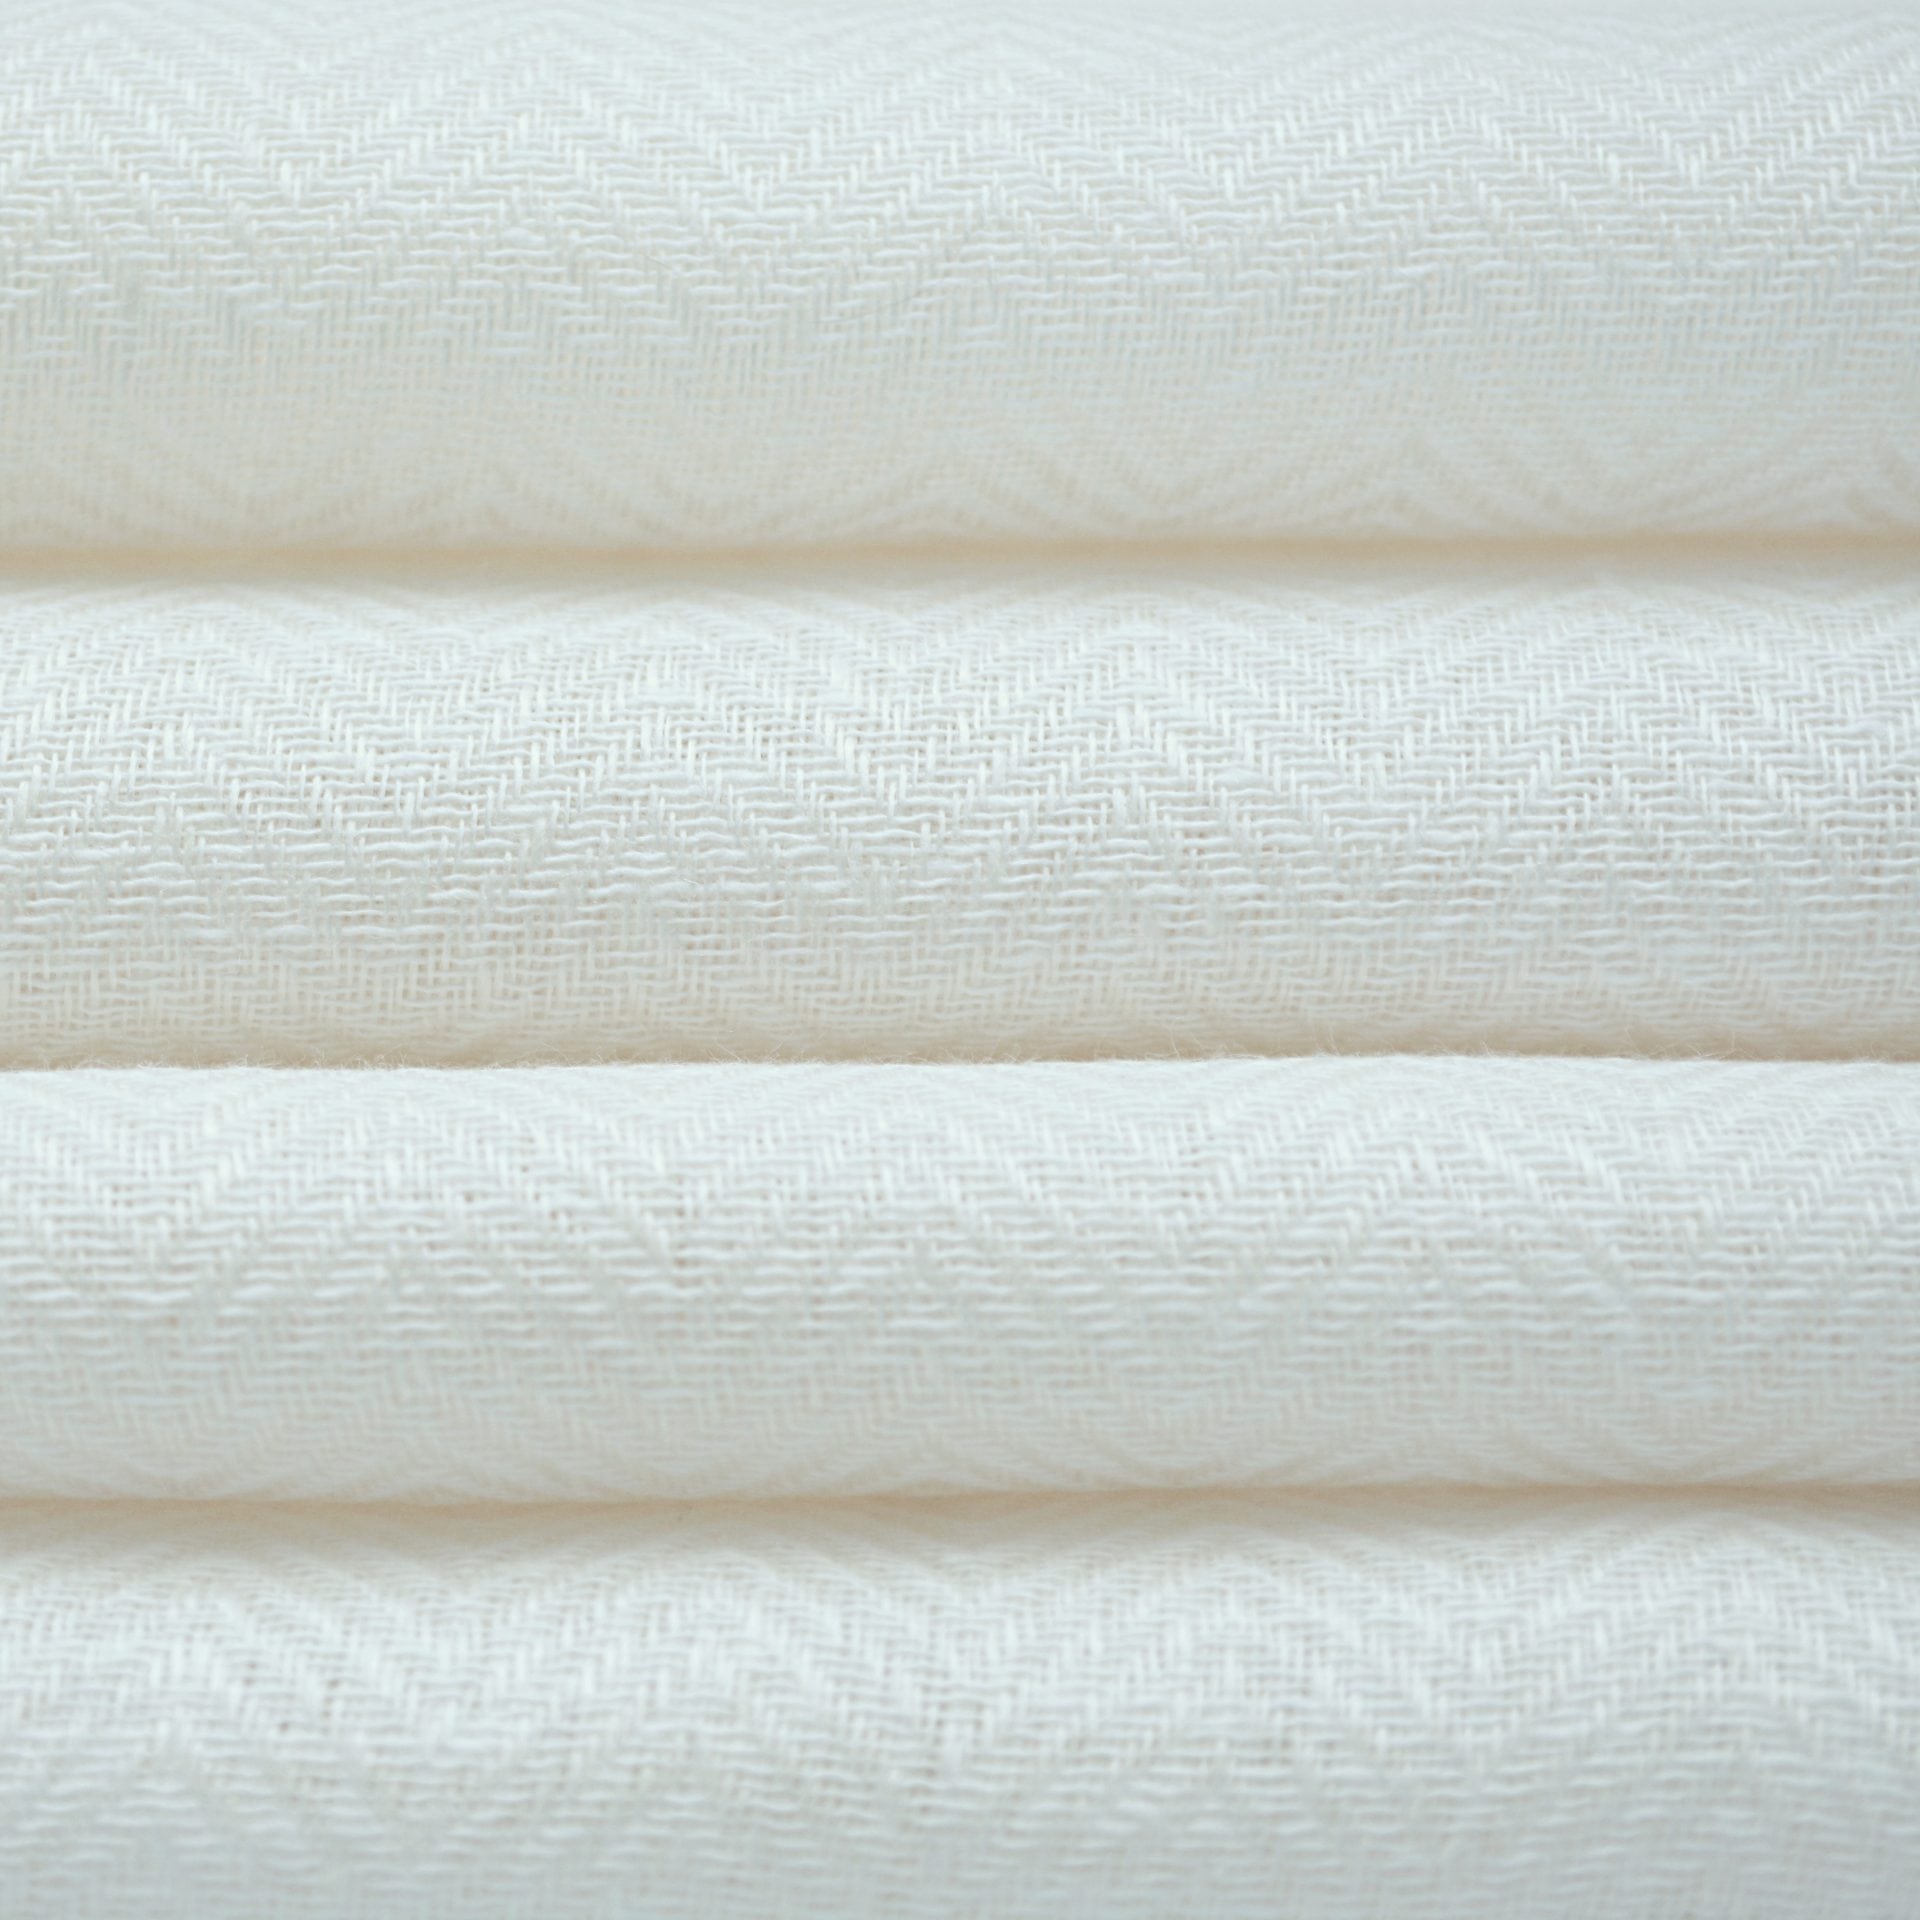 Off White Quartz Slub Linen Roman Shade Fabric (popular choice for